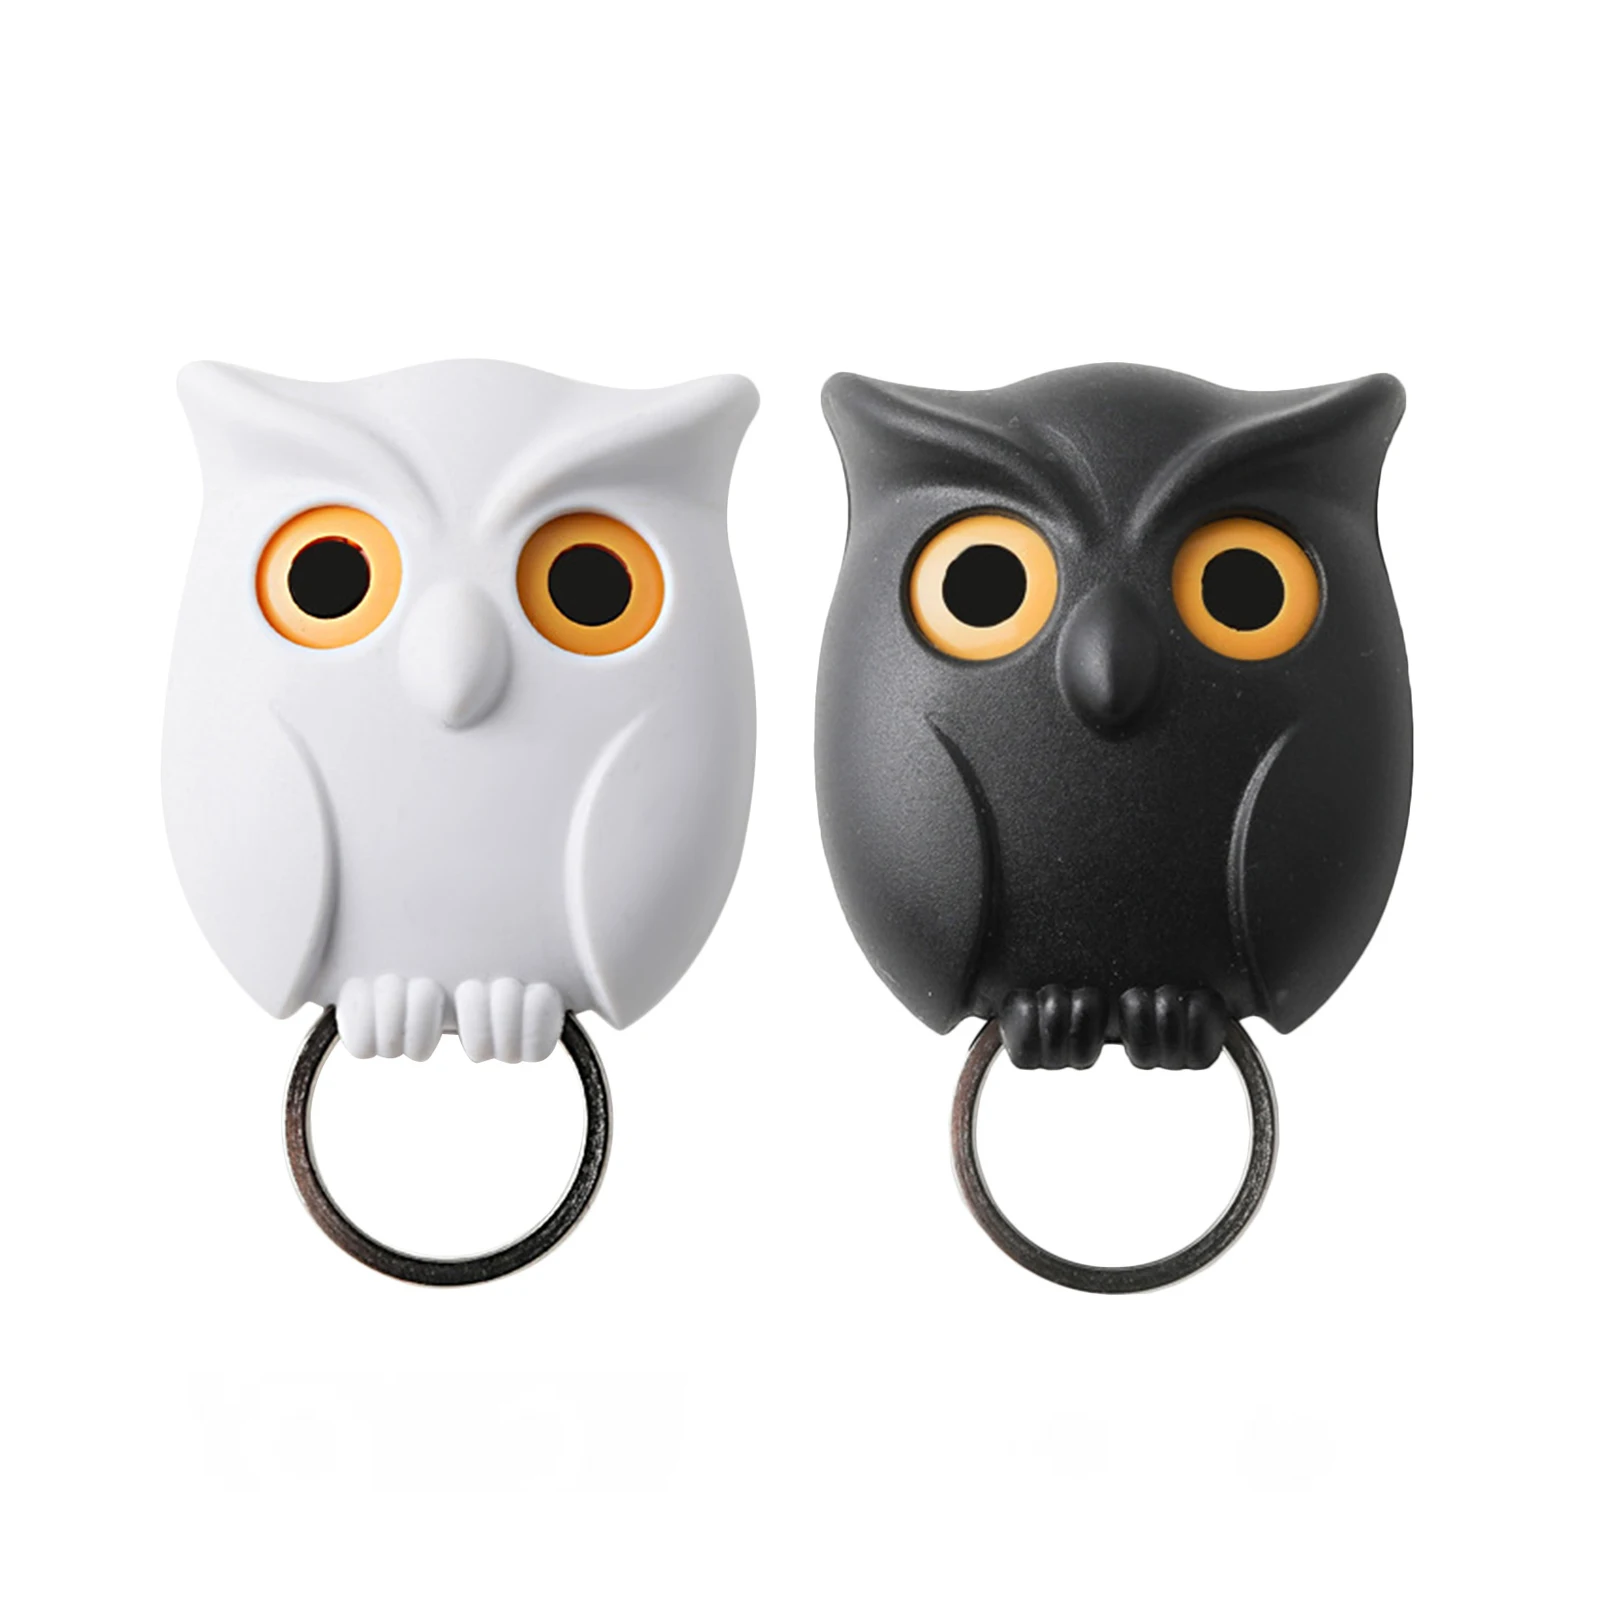 

Owl Key Hook Magnetic Keychain Holder Hook Night Owl Keyring Organizer With Automatic Open Close Owl Eyes Keyring Hanger For